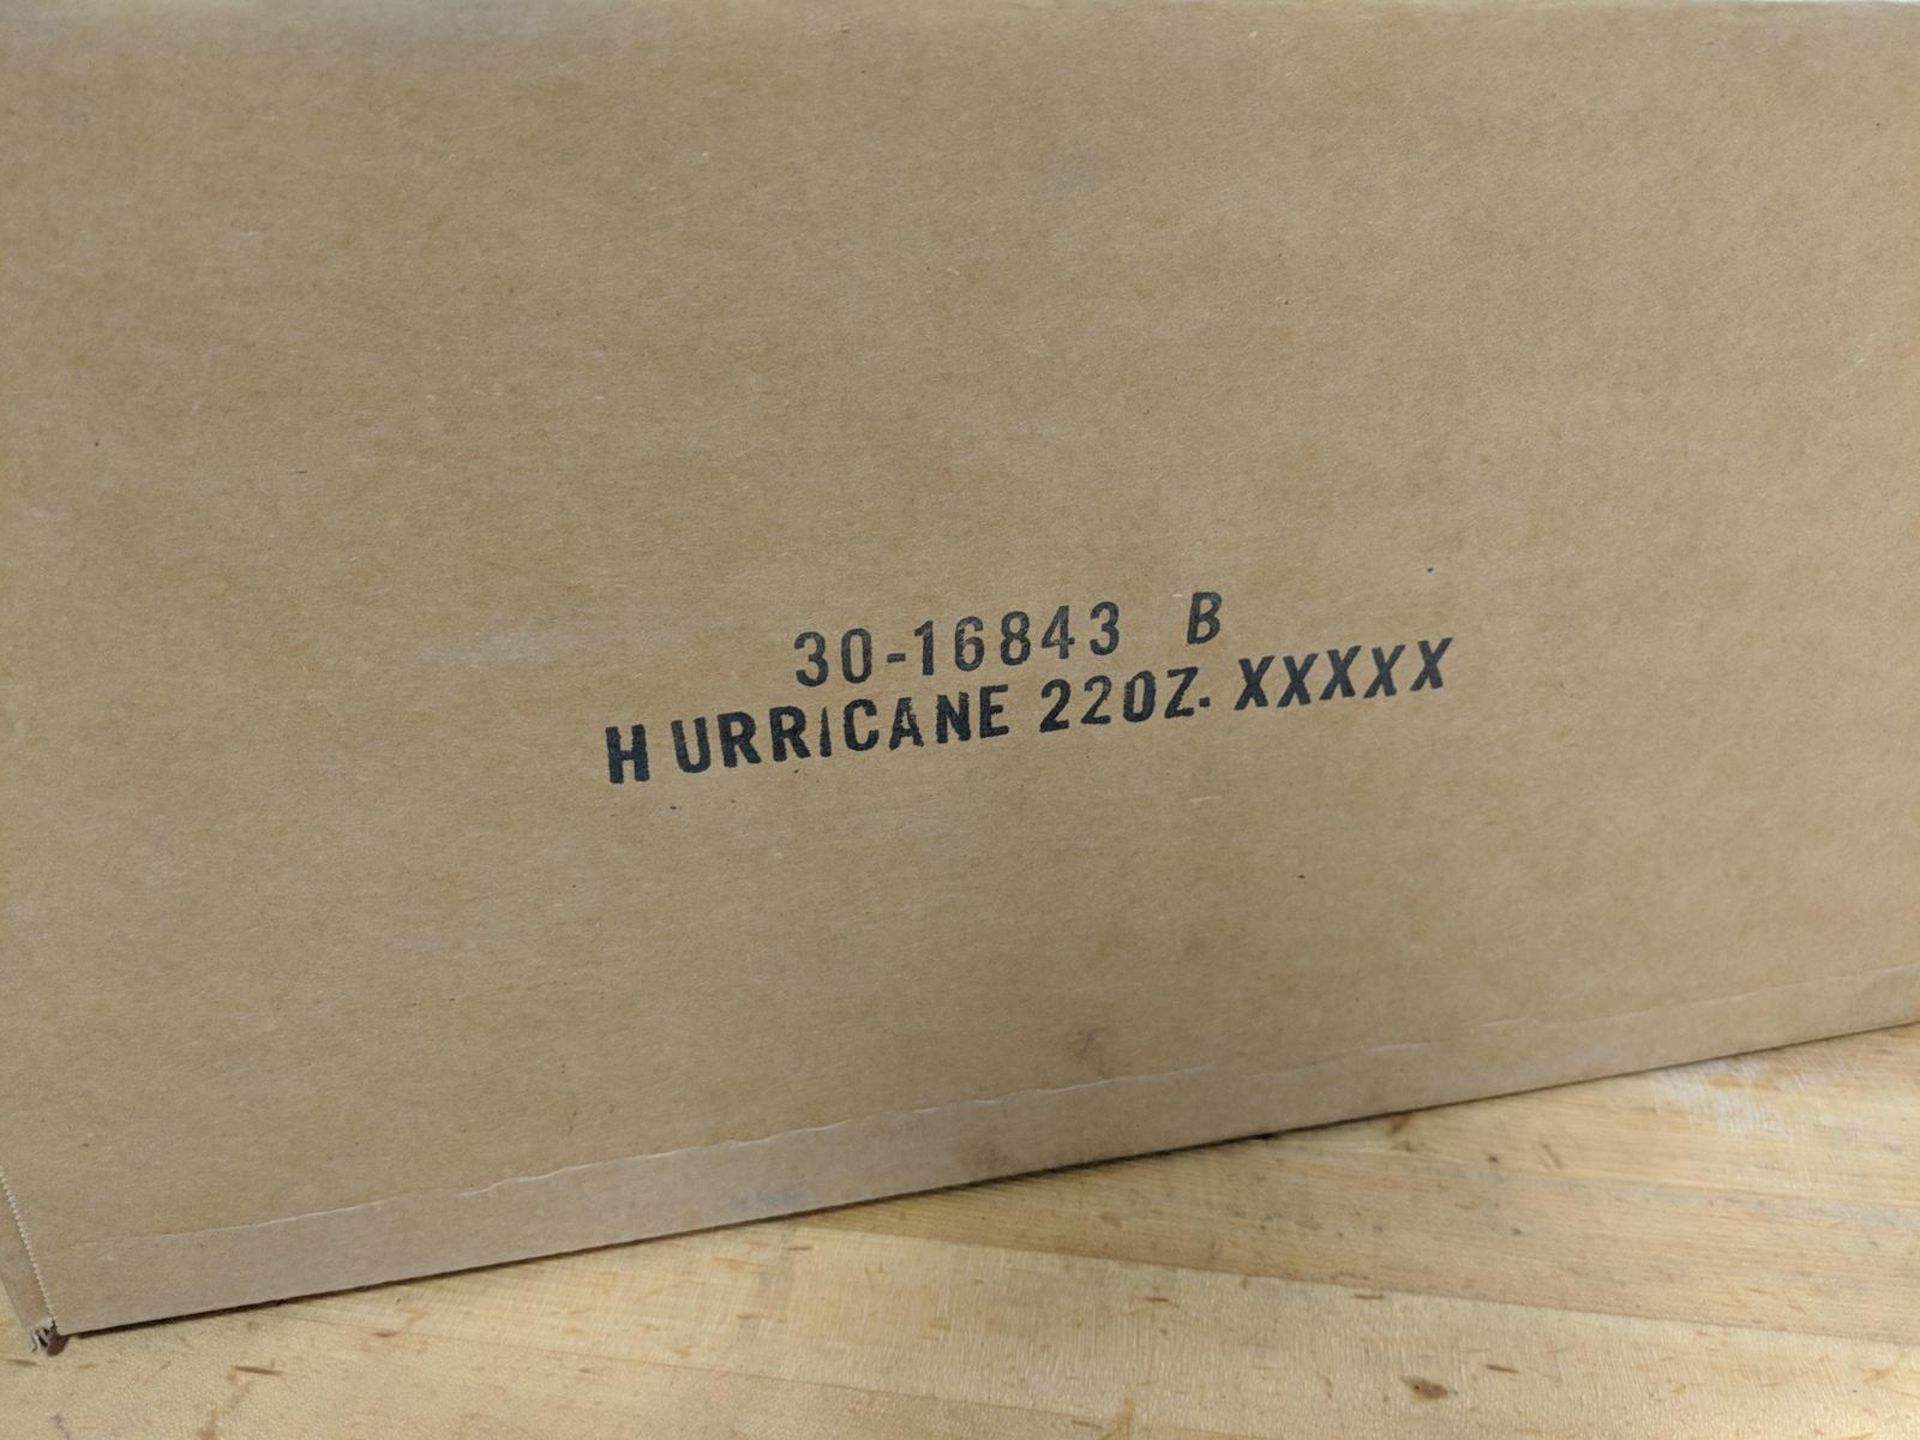 22oz/650ml Hurricane Glasses - Lot of 24 (1 Case), Arcoroc 16843 - Image 3 of 3